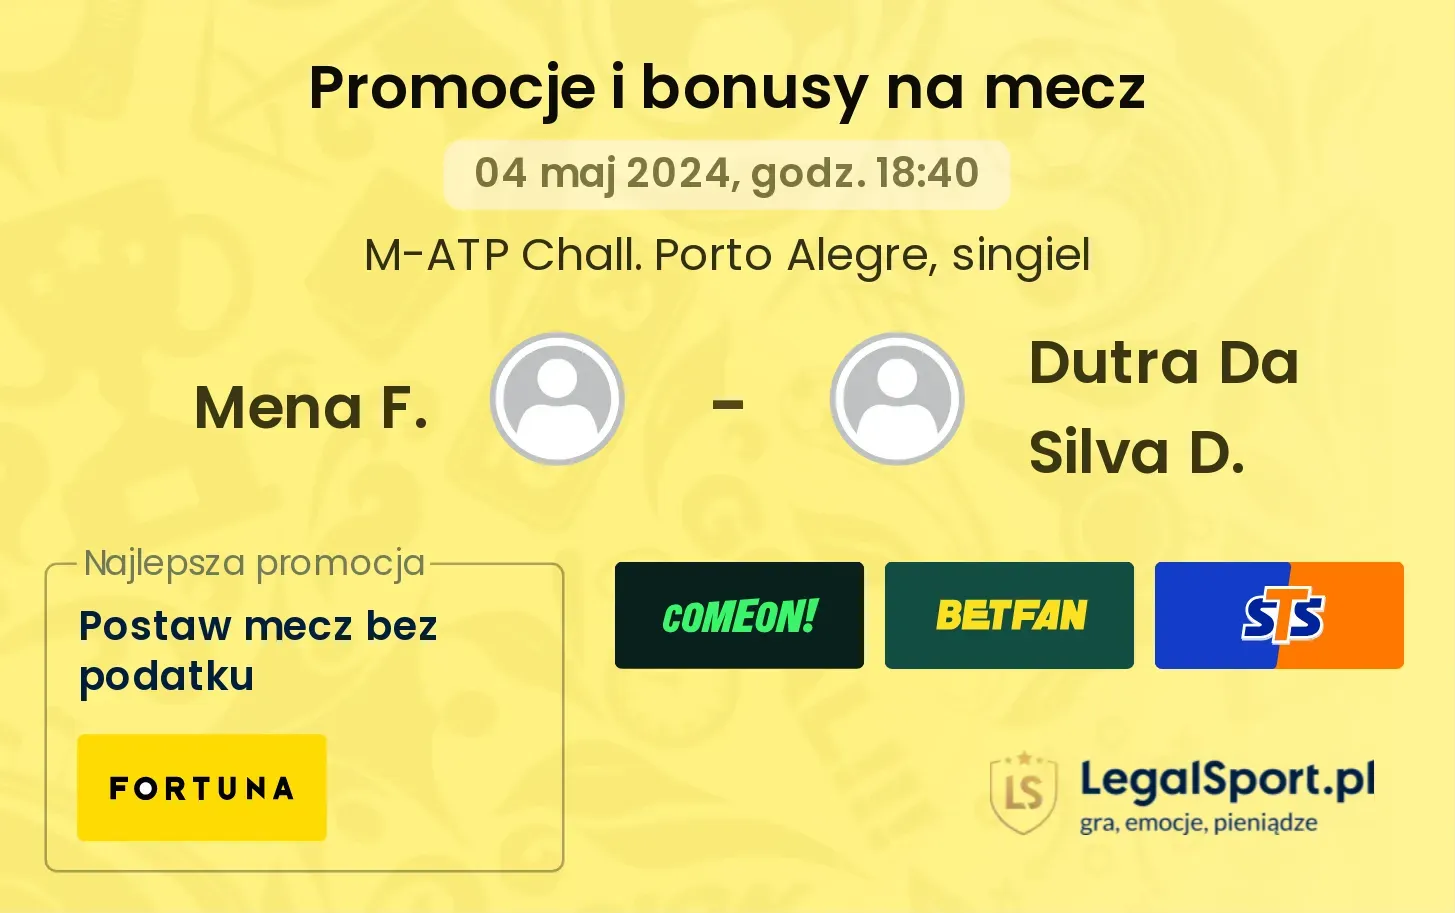 Mena F. - Dutra Da Silva D. promocje bonusy na mecz